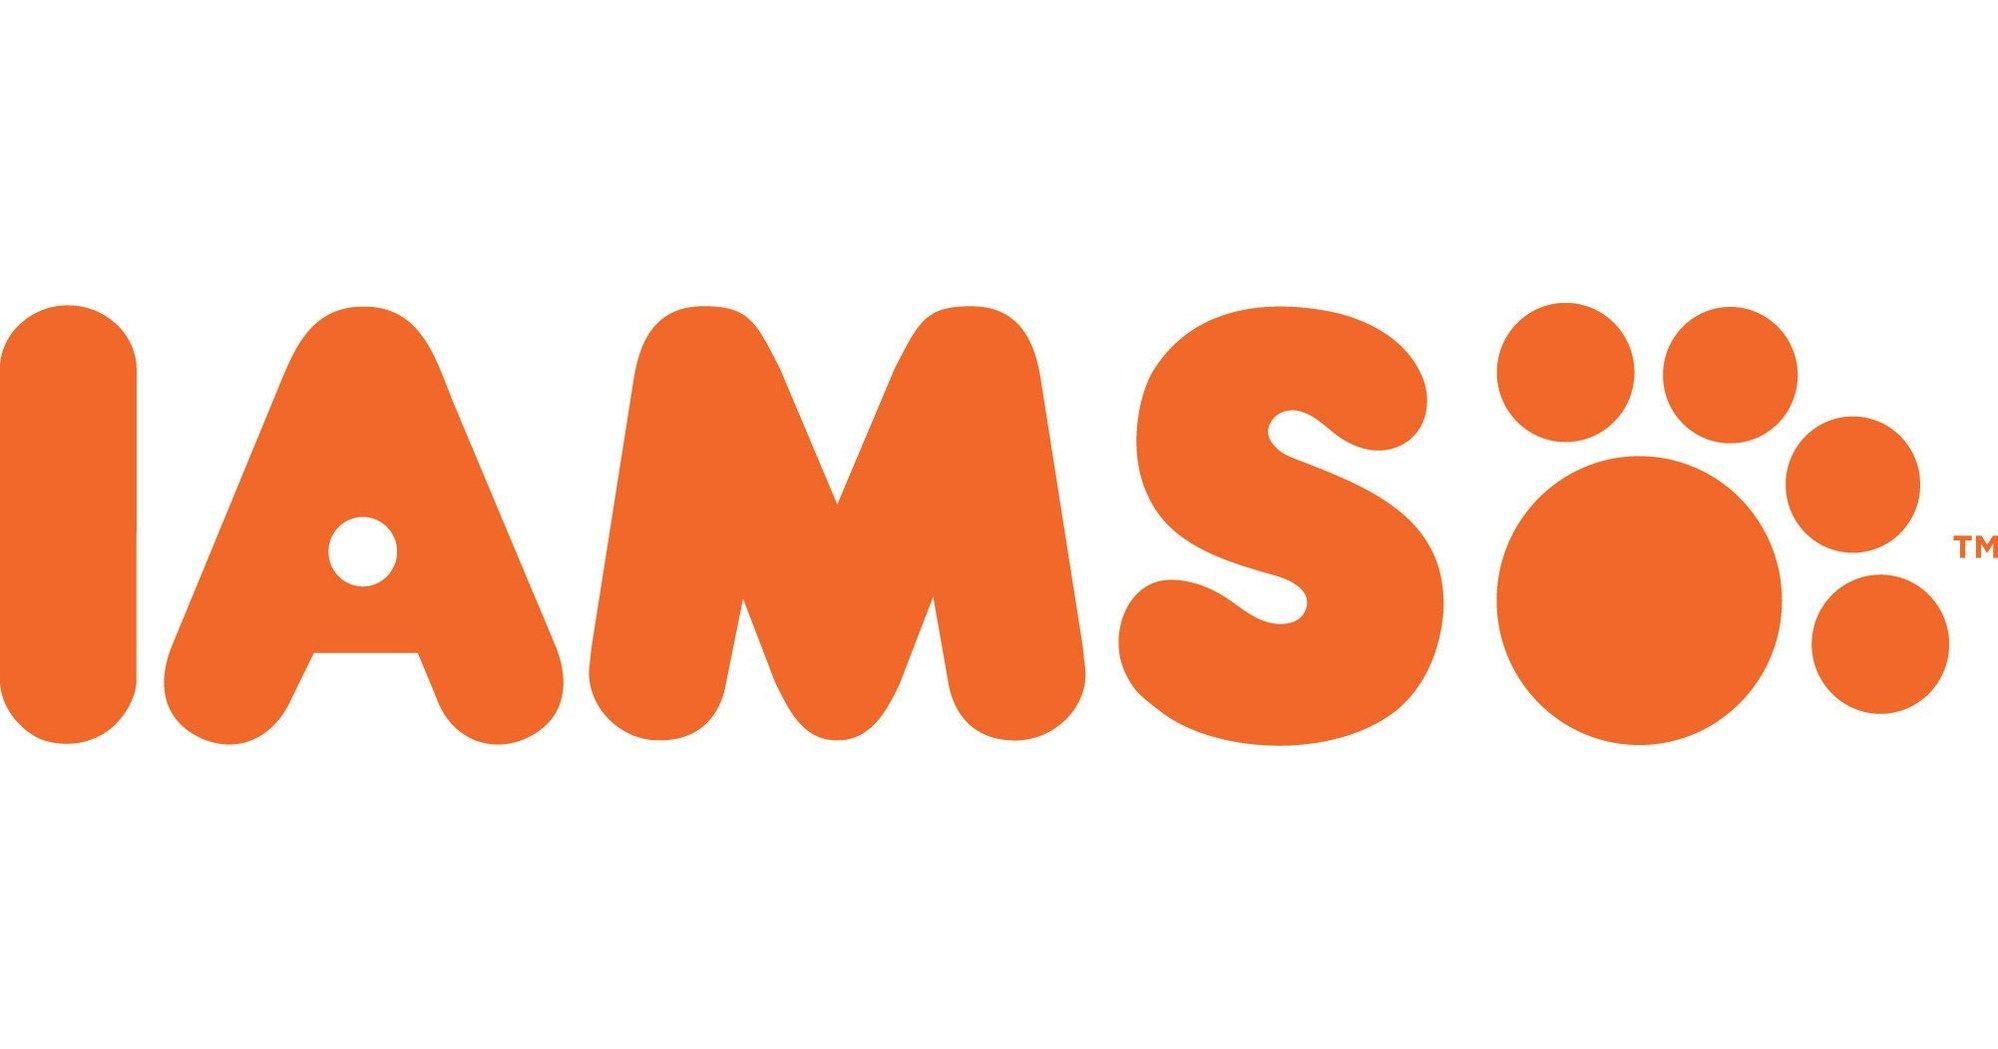 Iams Logo - LogoDix